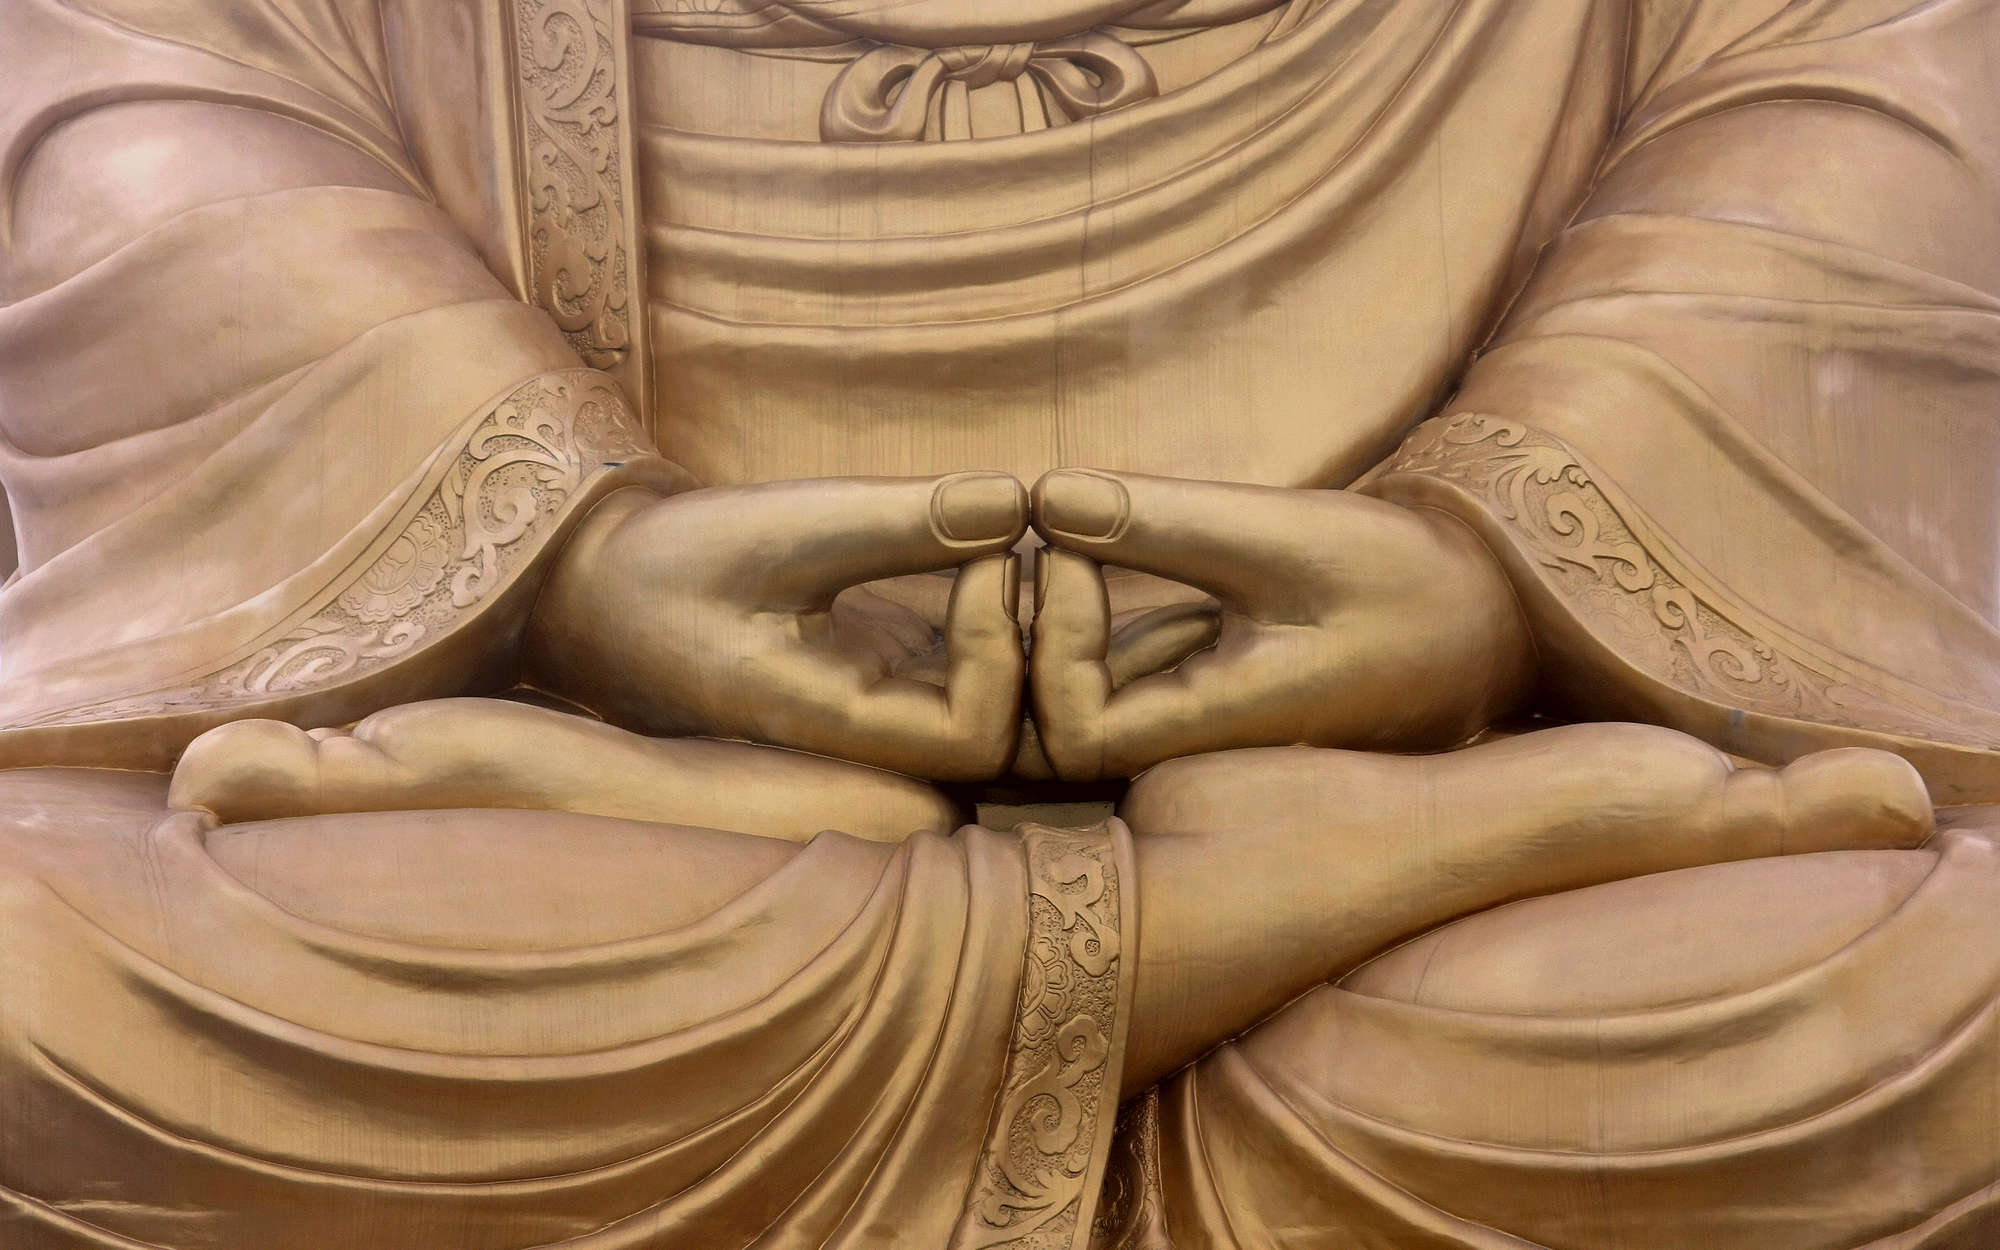             Fotomural Estatua de Buda religioso - tejido no tejido liso de alta calidad
        